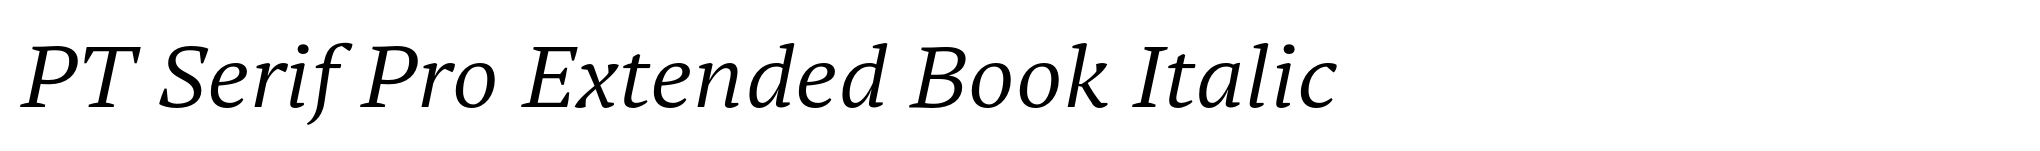 PT Serif Pro Extended Book Italic image